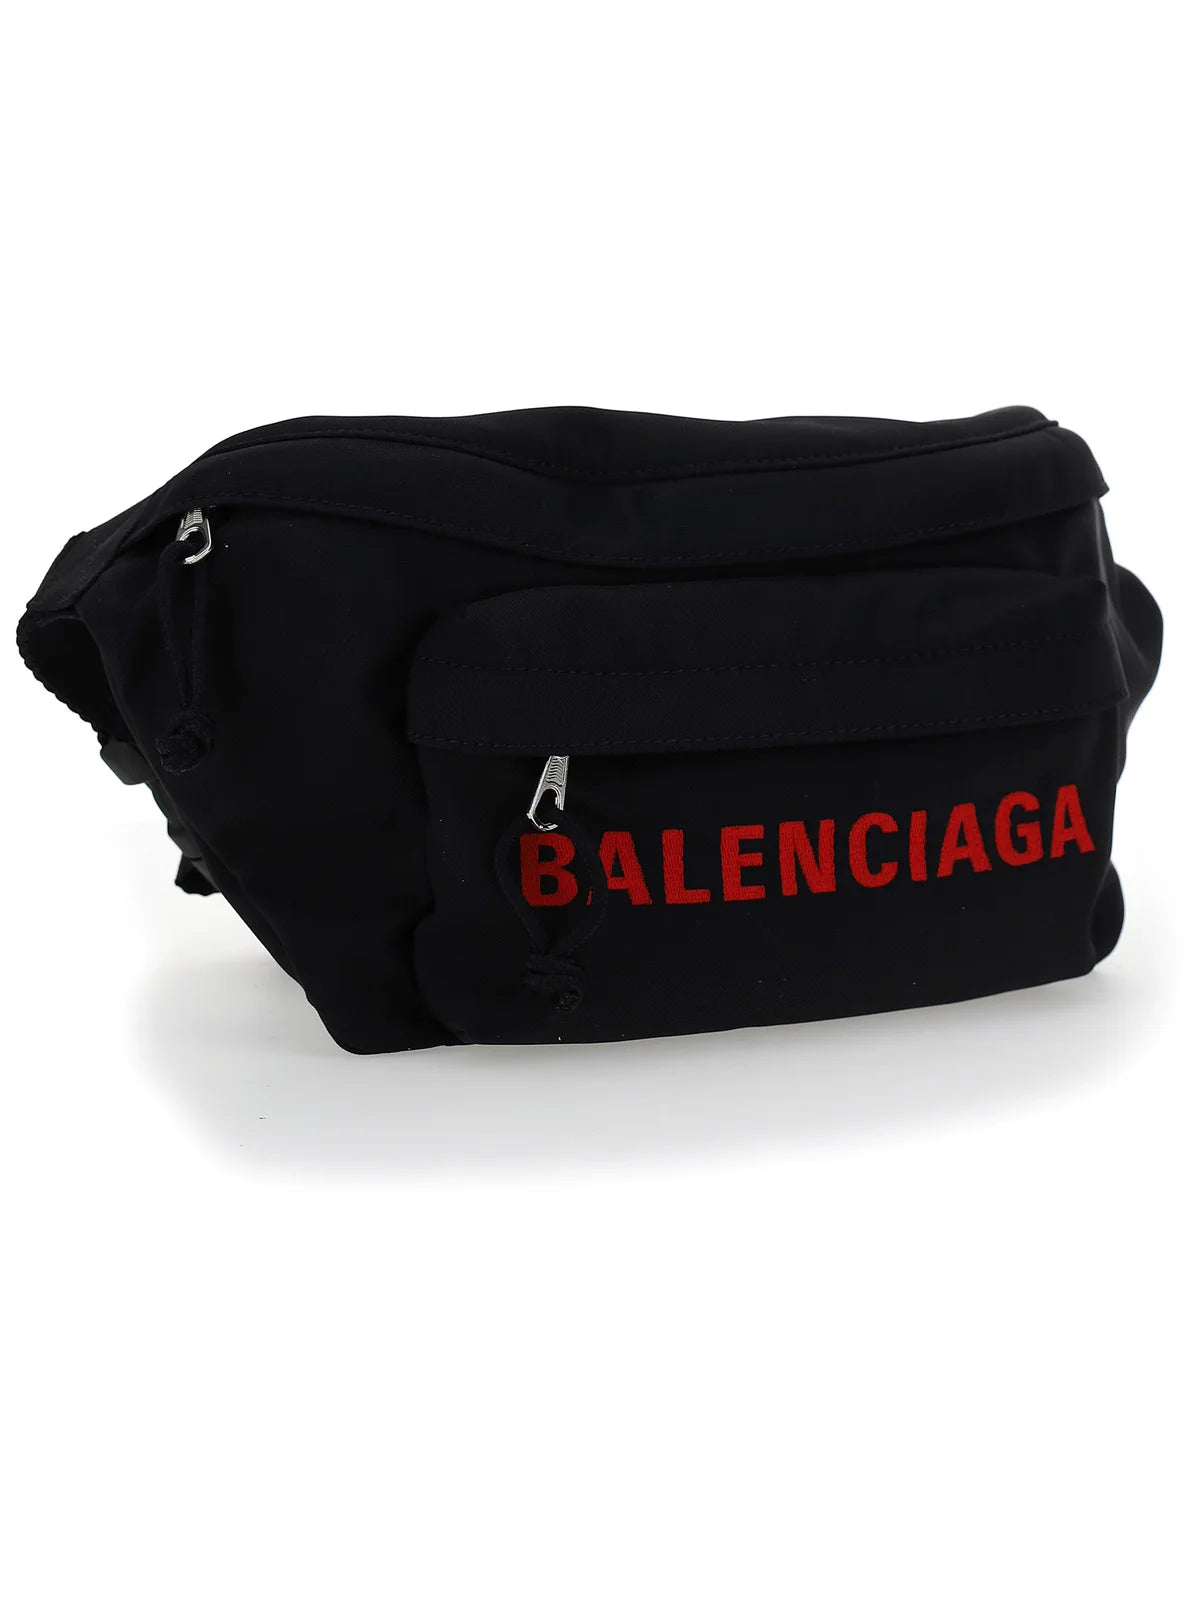 Balenciaga Belt Bag Black in Nylon  US